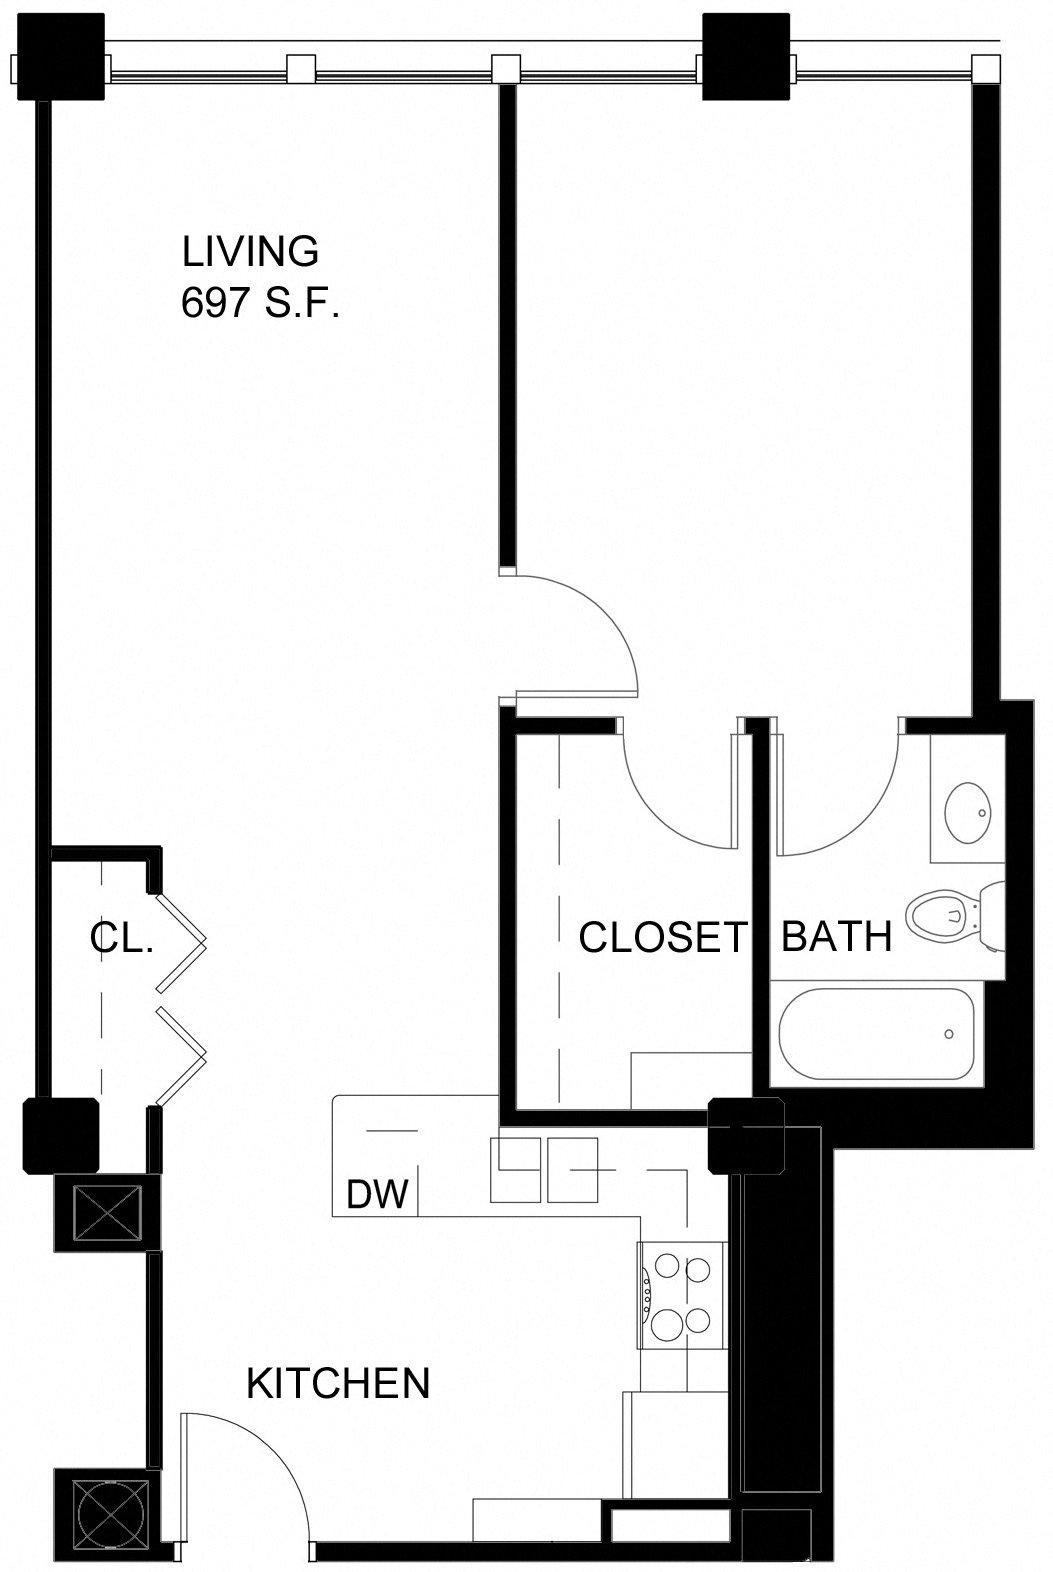 Floorplan for Apartment #P313B, 1 bedroom unit at Halstead Providence